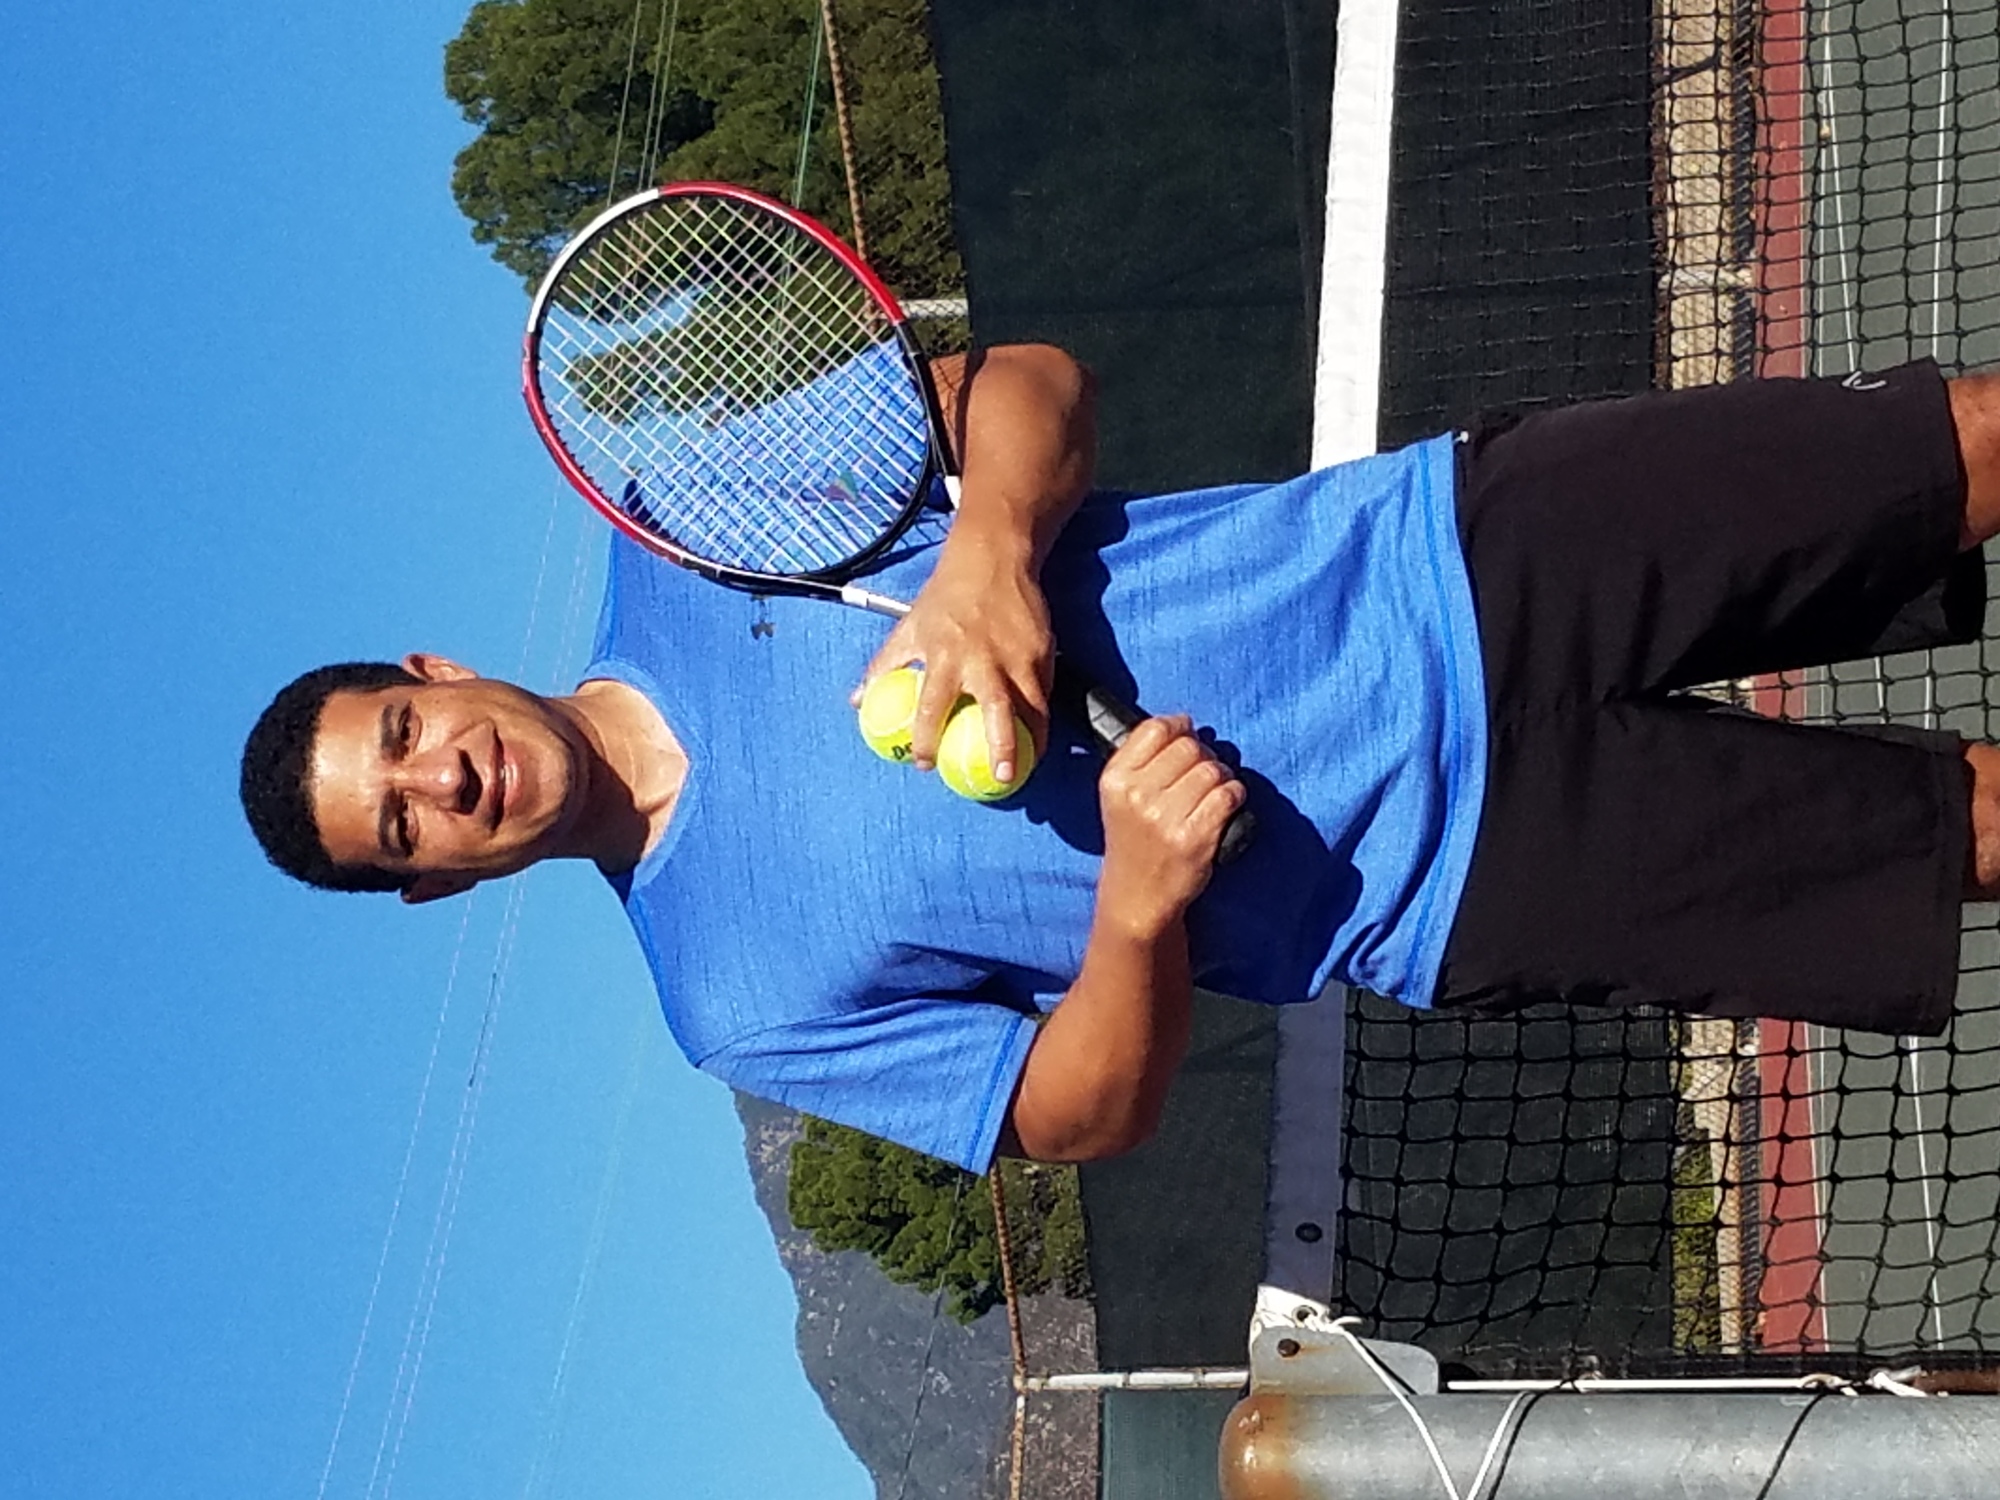 Roger H. teaches tennis lessons in San Marino, CA